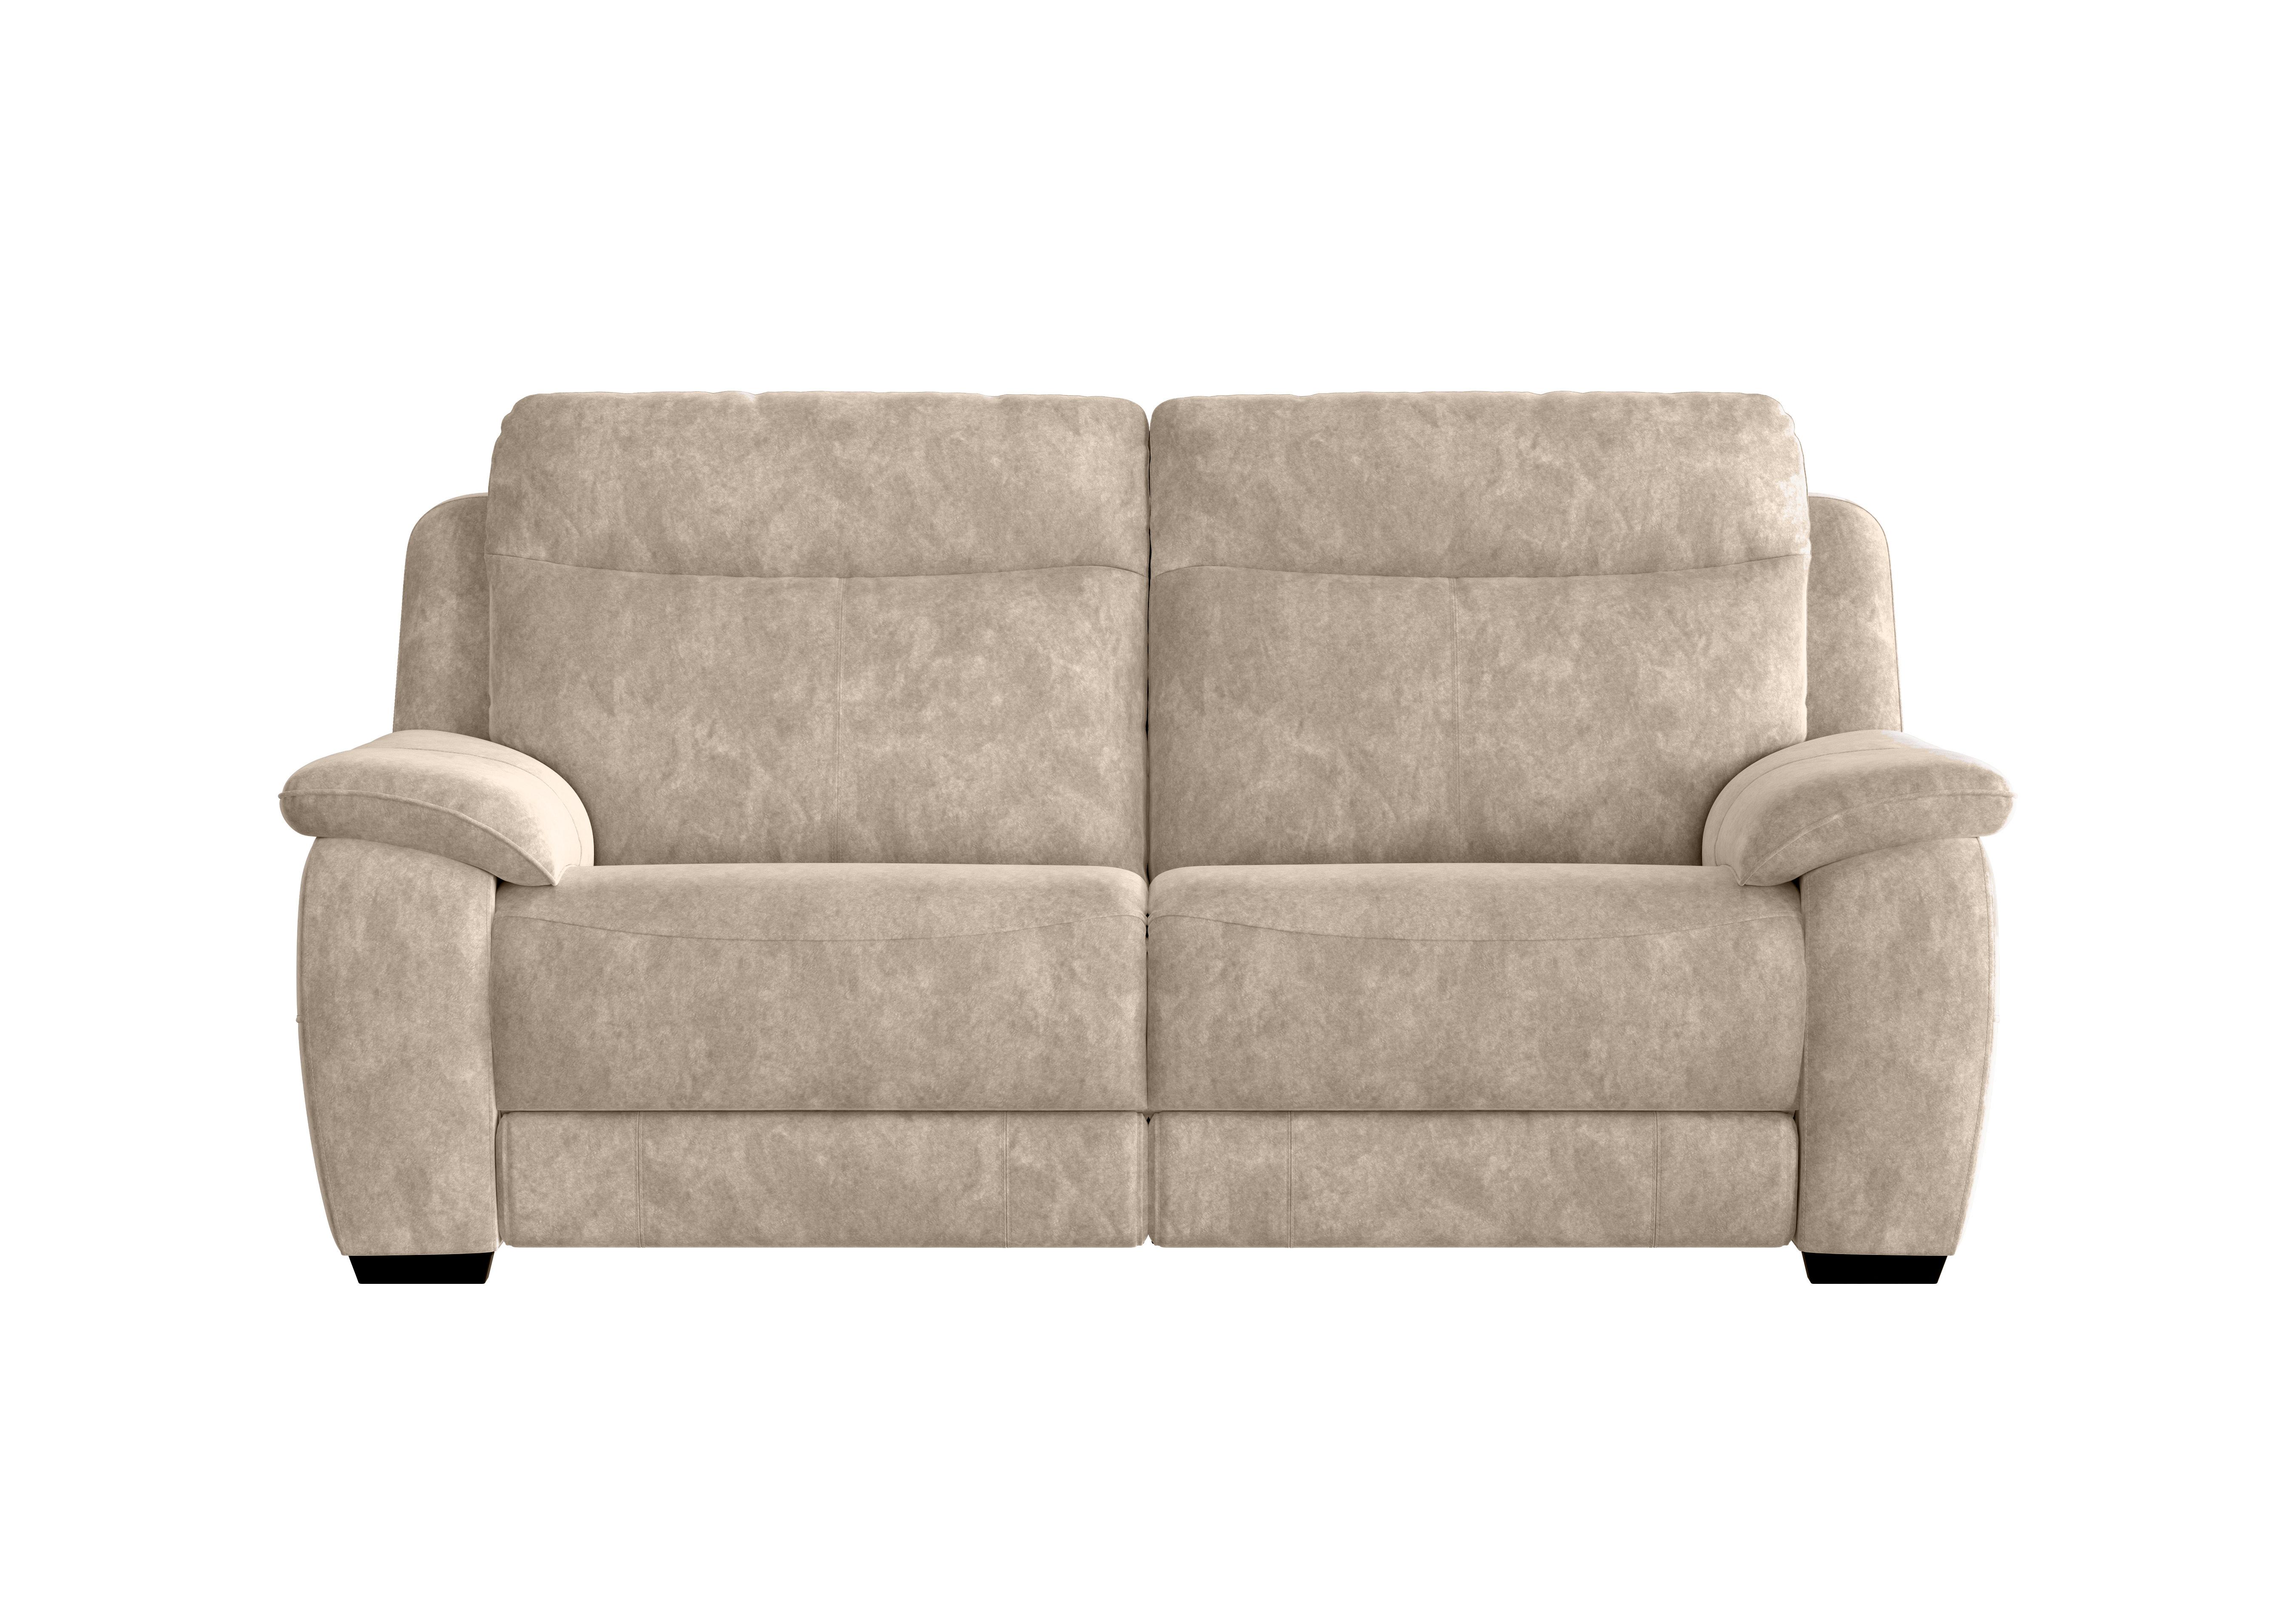 Starlight Express 3 Seater Fabric Recliner Sofa with Power Headrests in Bfa-Bnn-R26 Fv2 Cream on Furniture Village